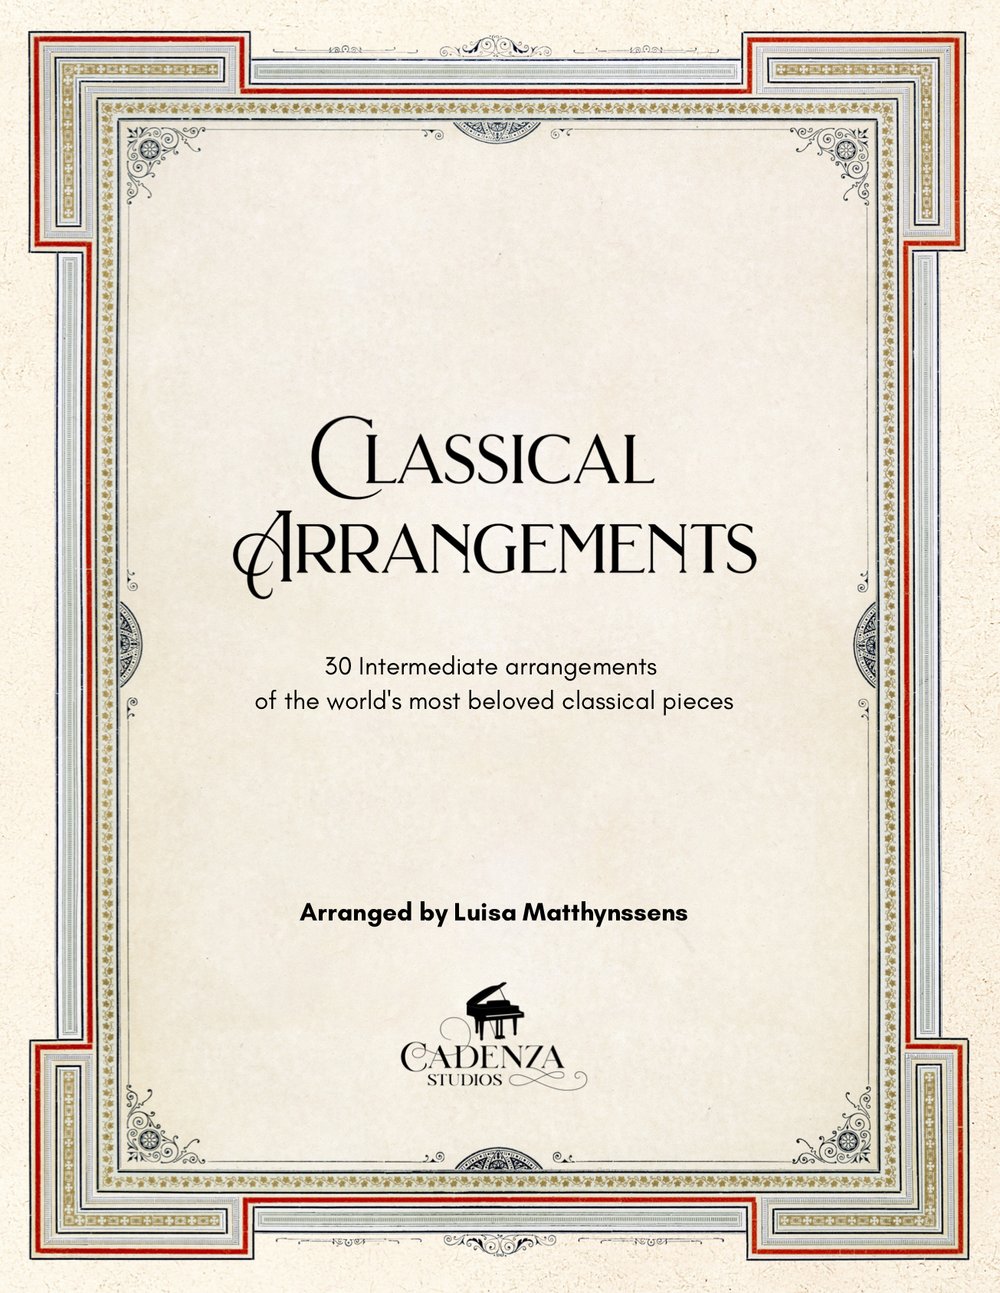 Classical arrangements Digital Cover.jpg